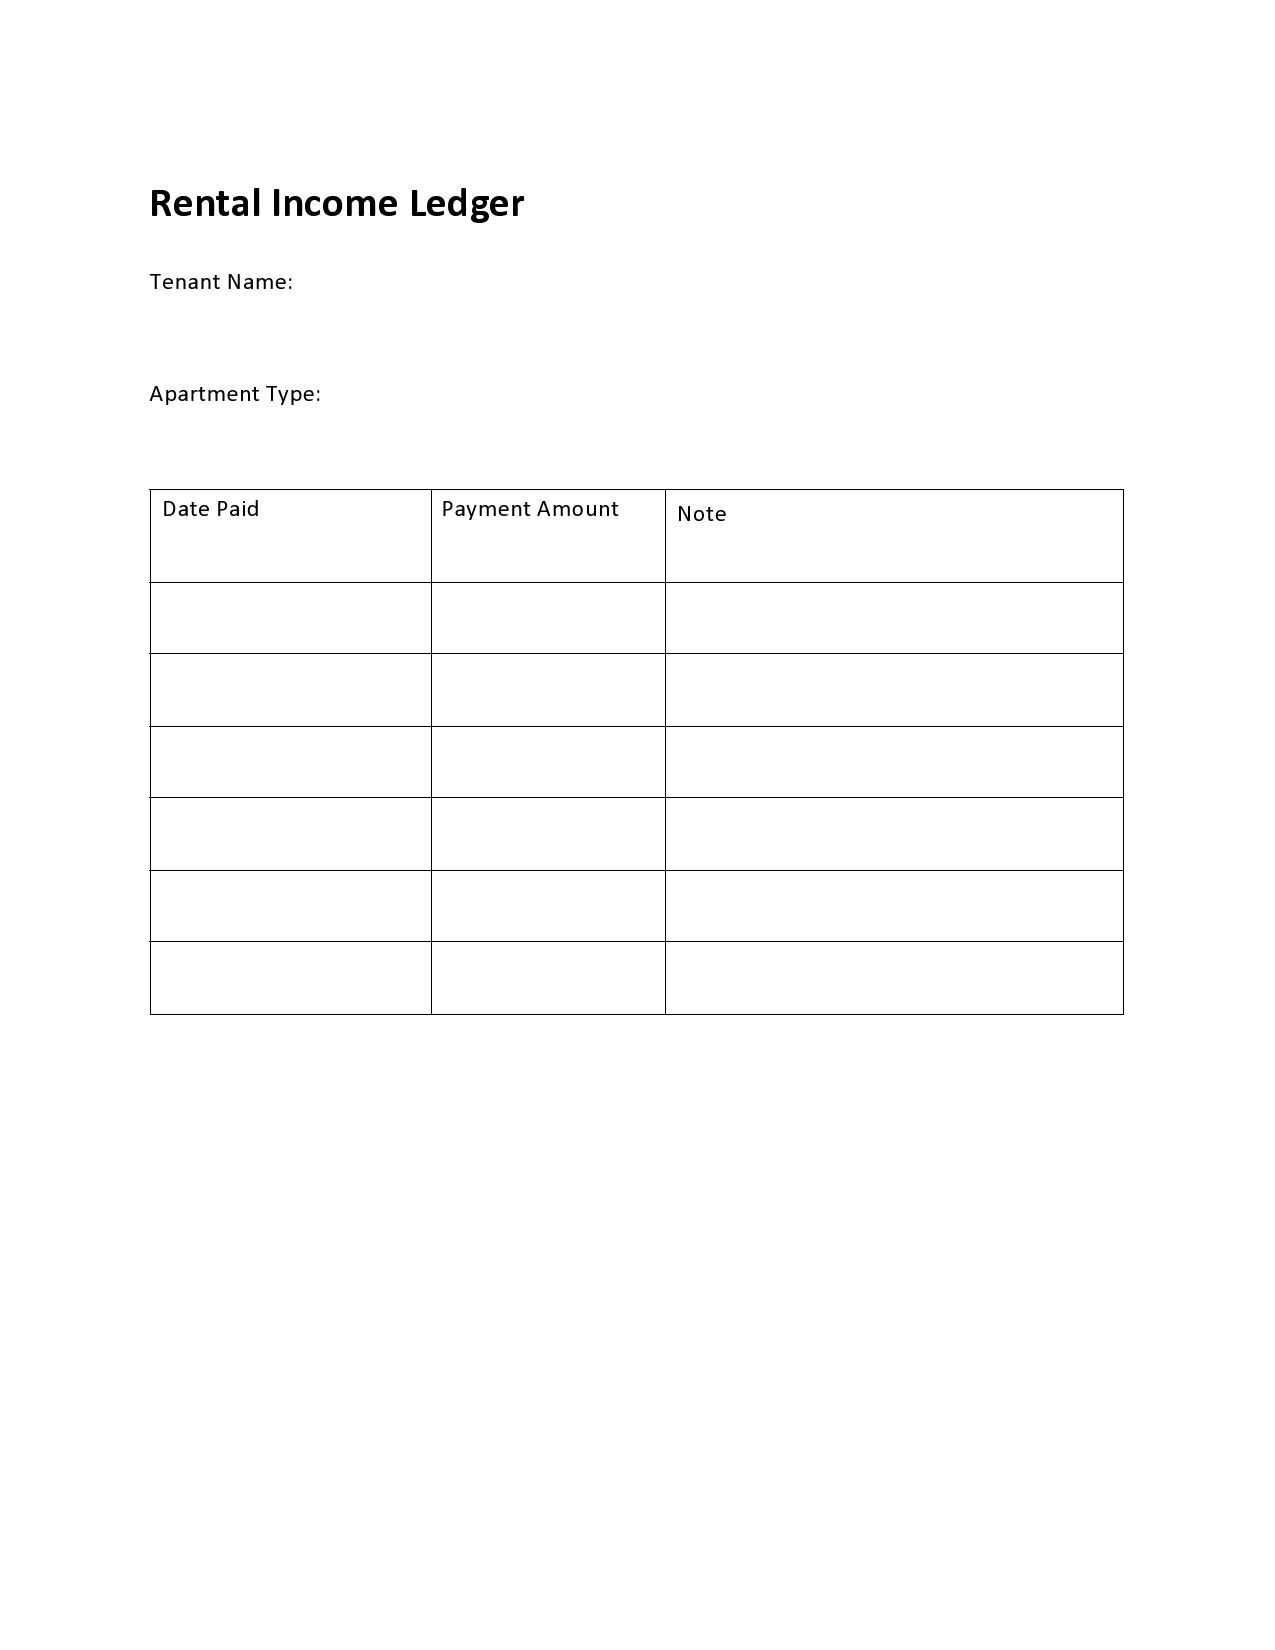 Free rental ledger template 35